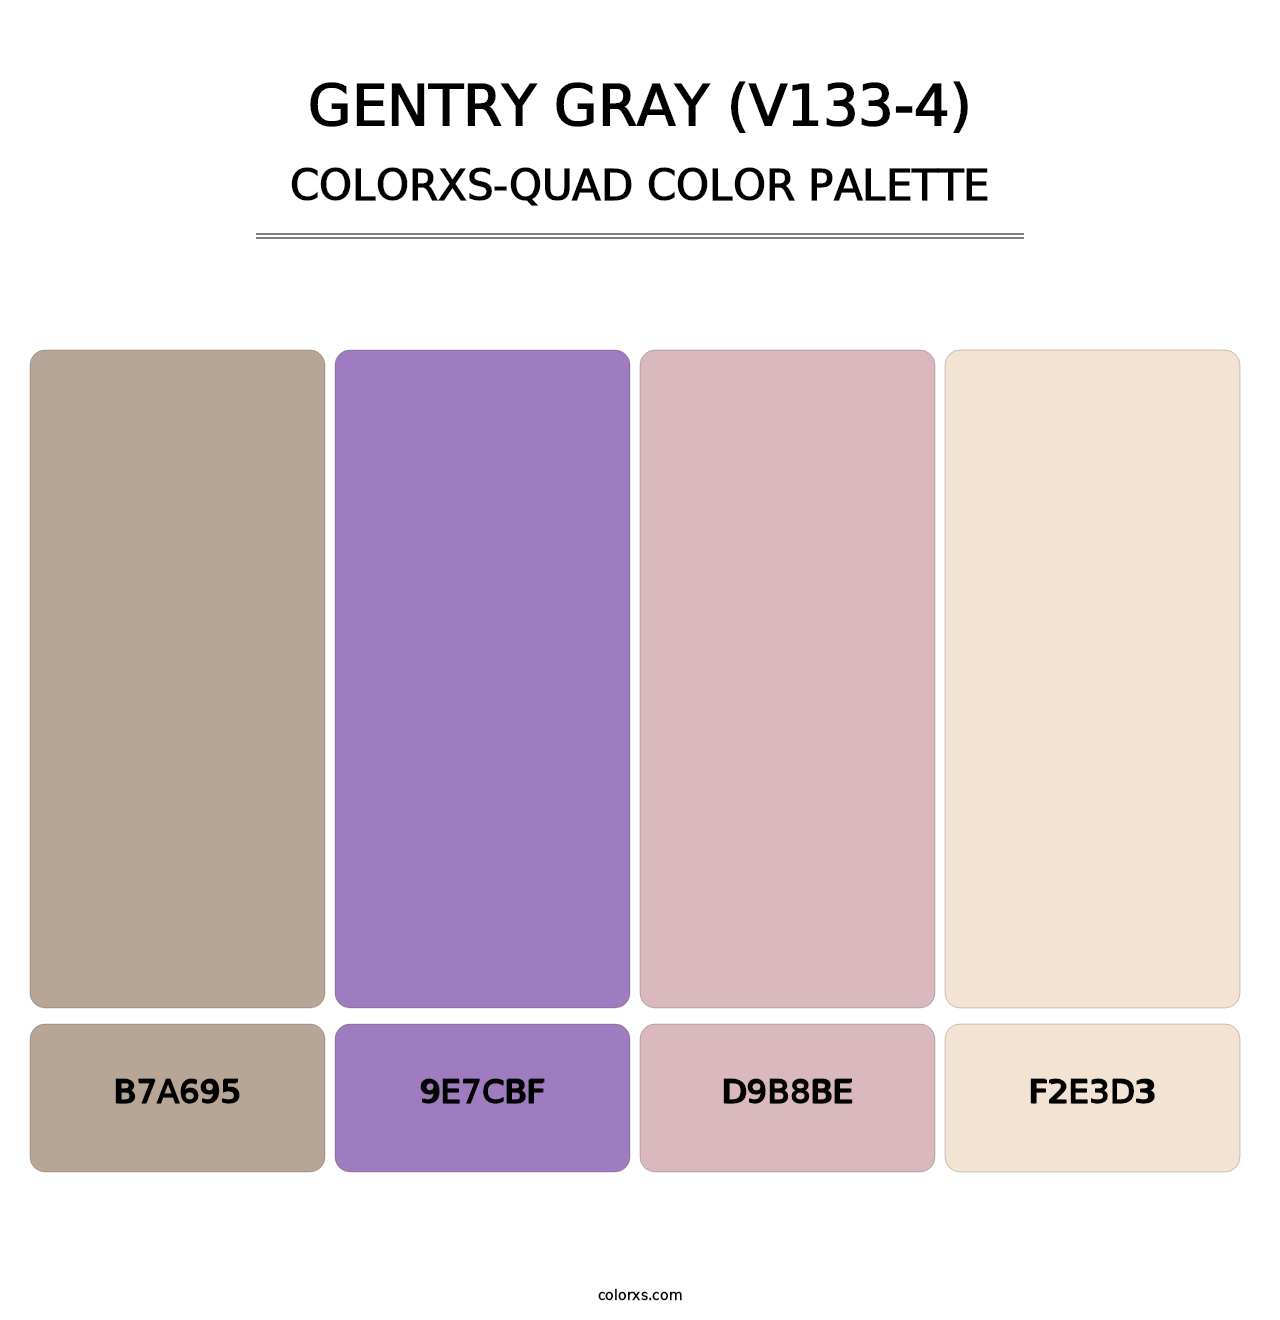 Gentry Gray (V133-4) - Colorxs Quad Palette